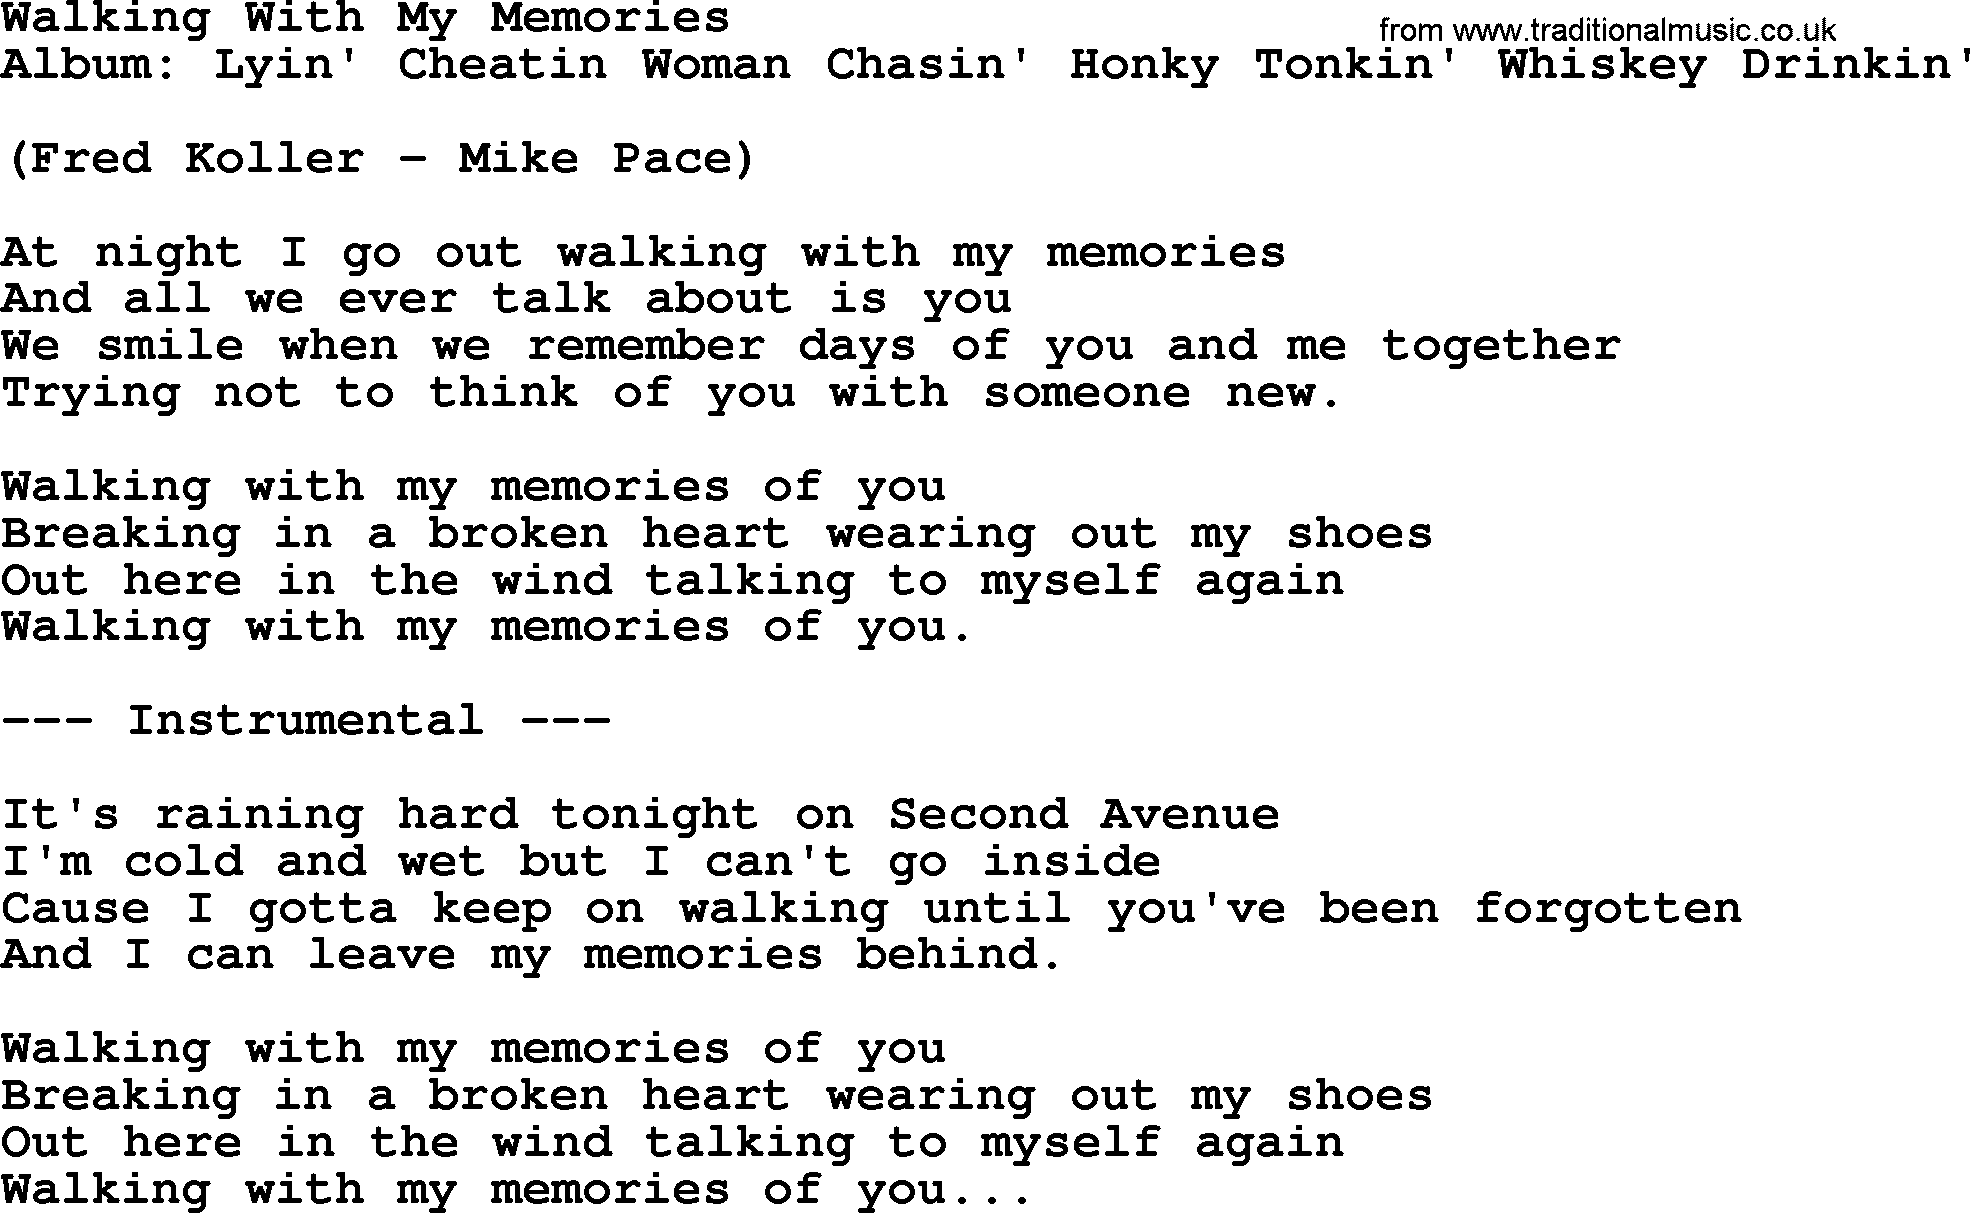 Loretta Lynn song: Walking With My Memories lyrics